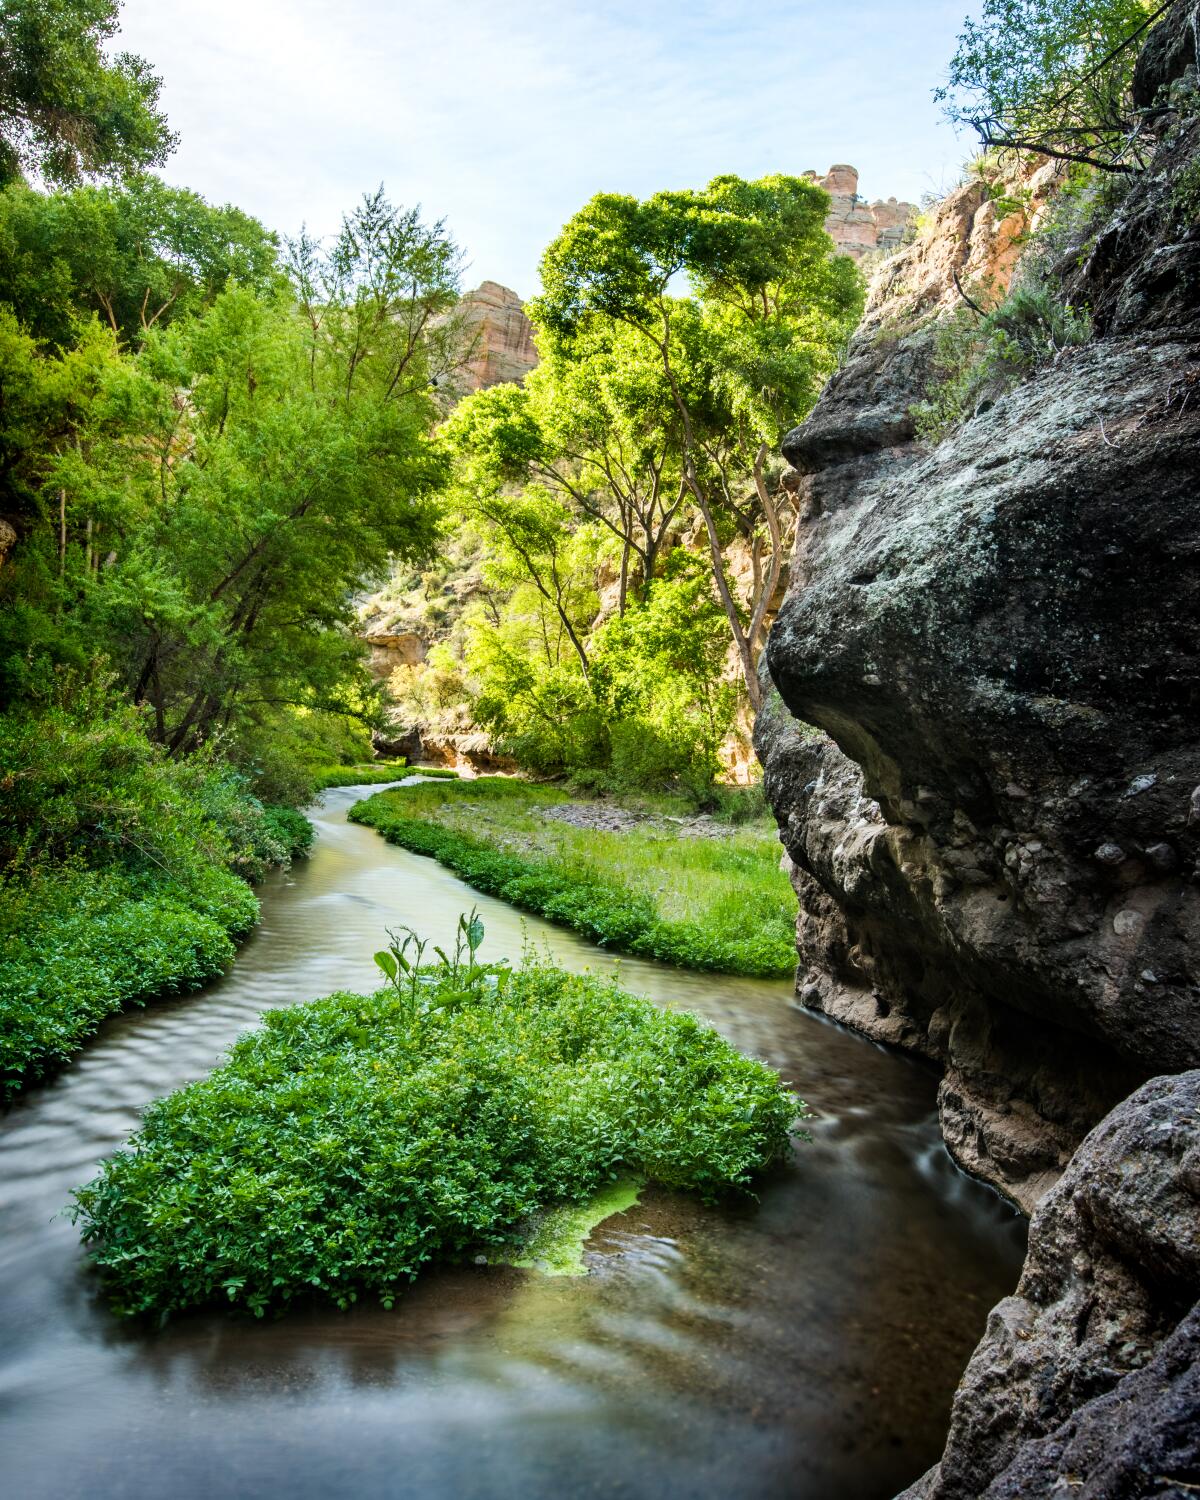 Aravaipa Canyon is a rare, watery slash through the Sonoran Desert of southeastern Arizona.